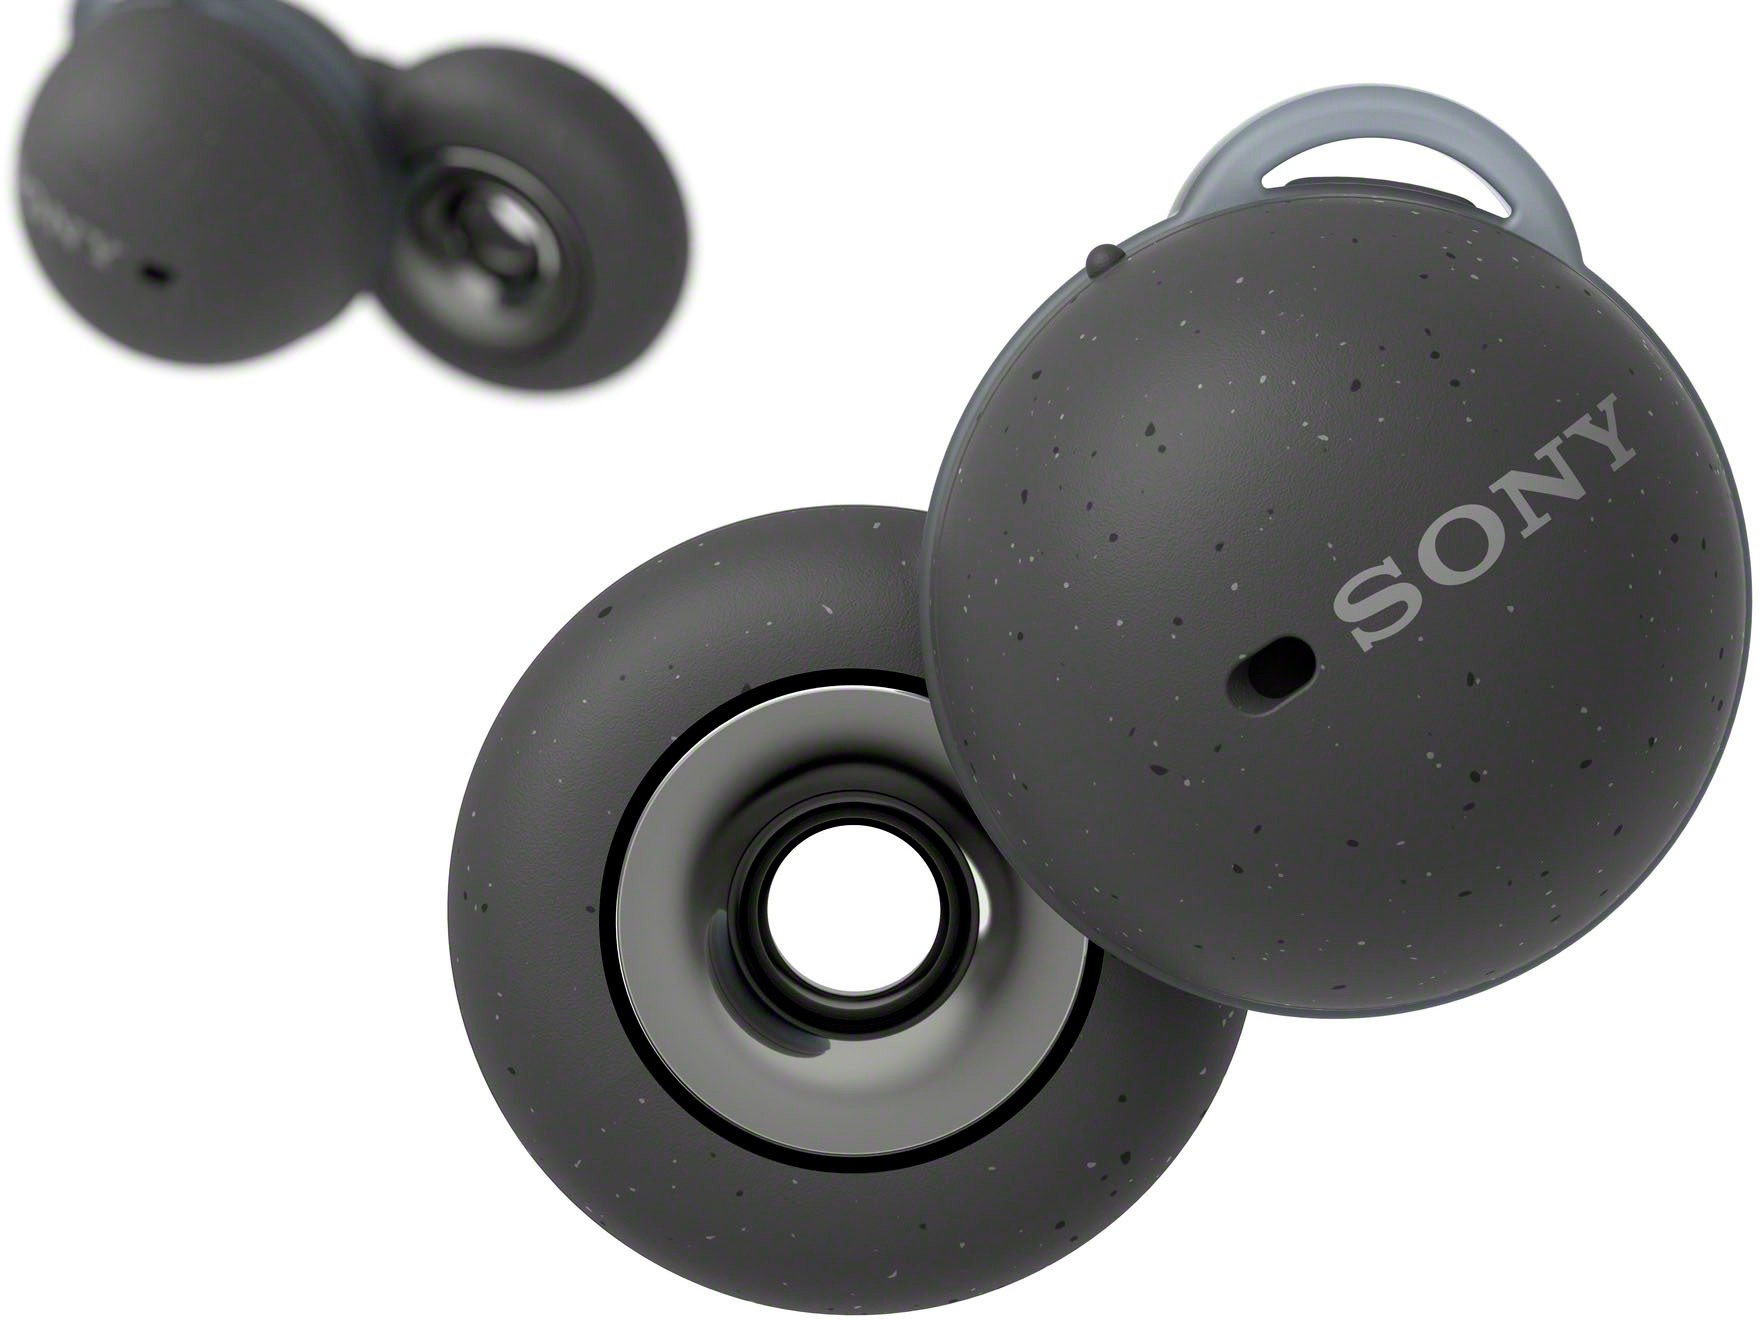 Sony Linkbuds leak reveals bizarre design of future wireless earbuds